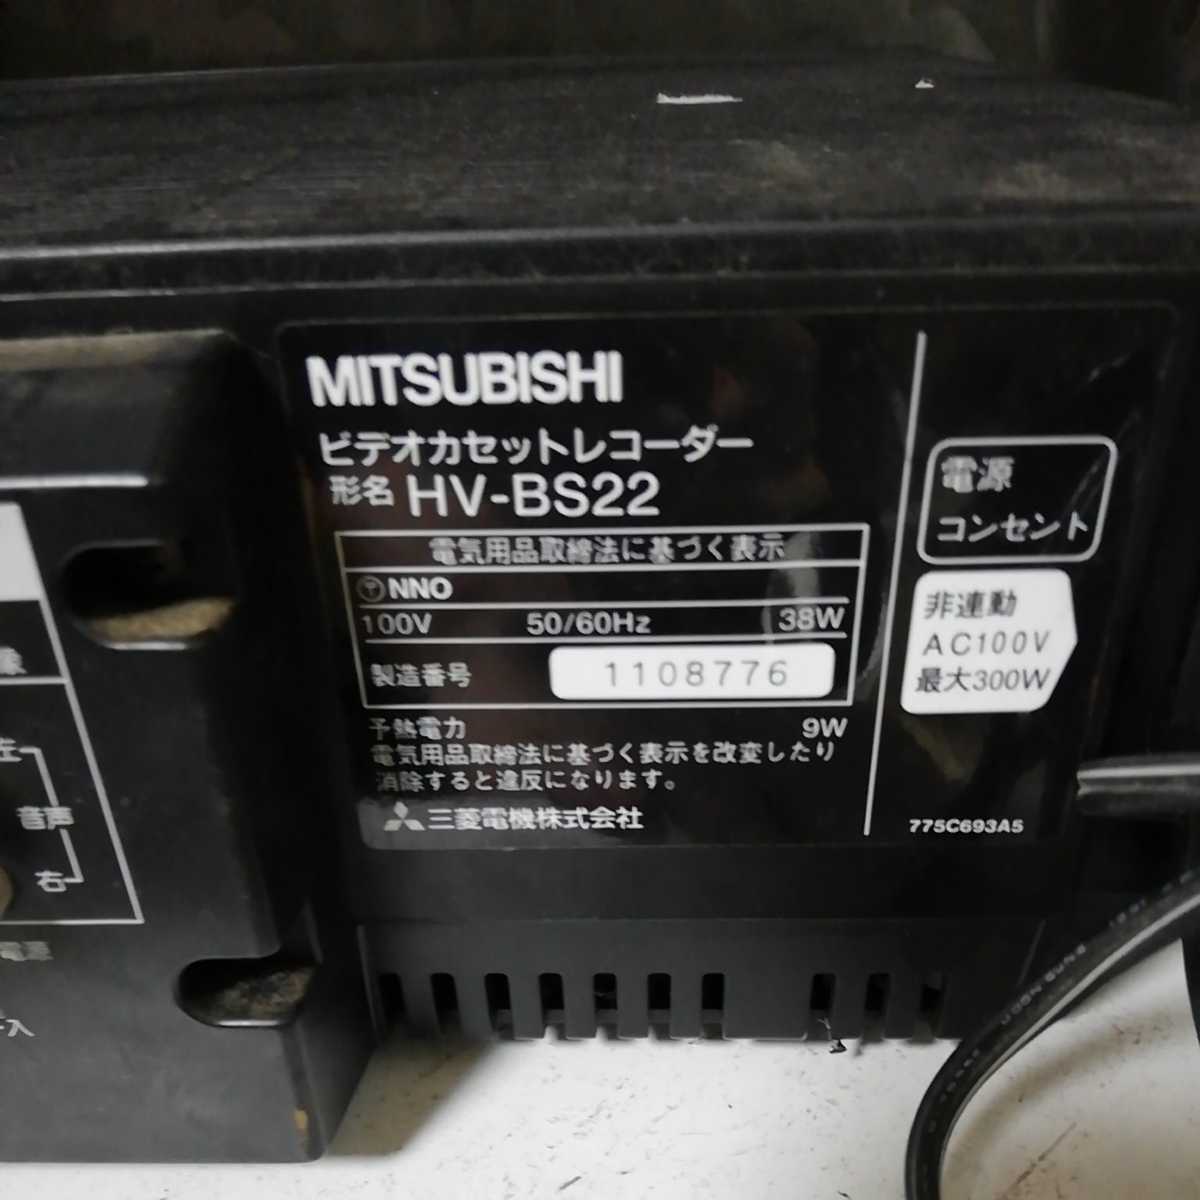 A-7310)MITSUBISHI ビデオカセットレコーダー HV-BS22｜PayPayフリマ